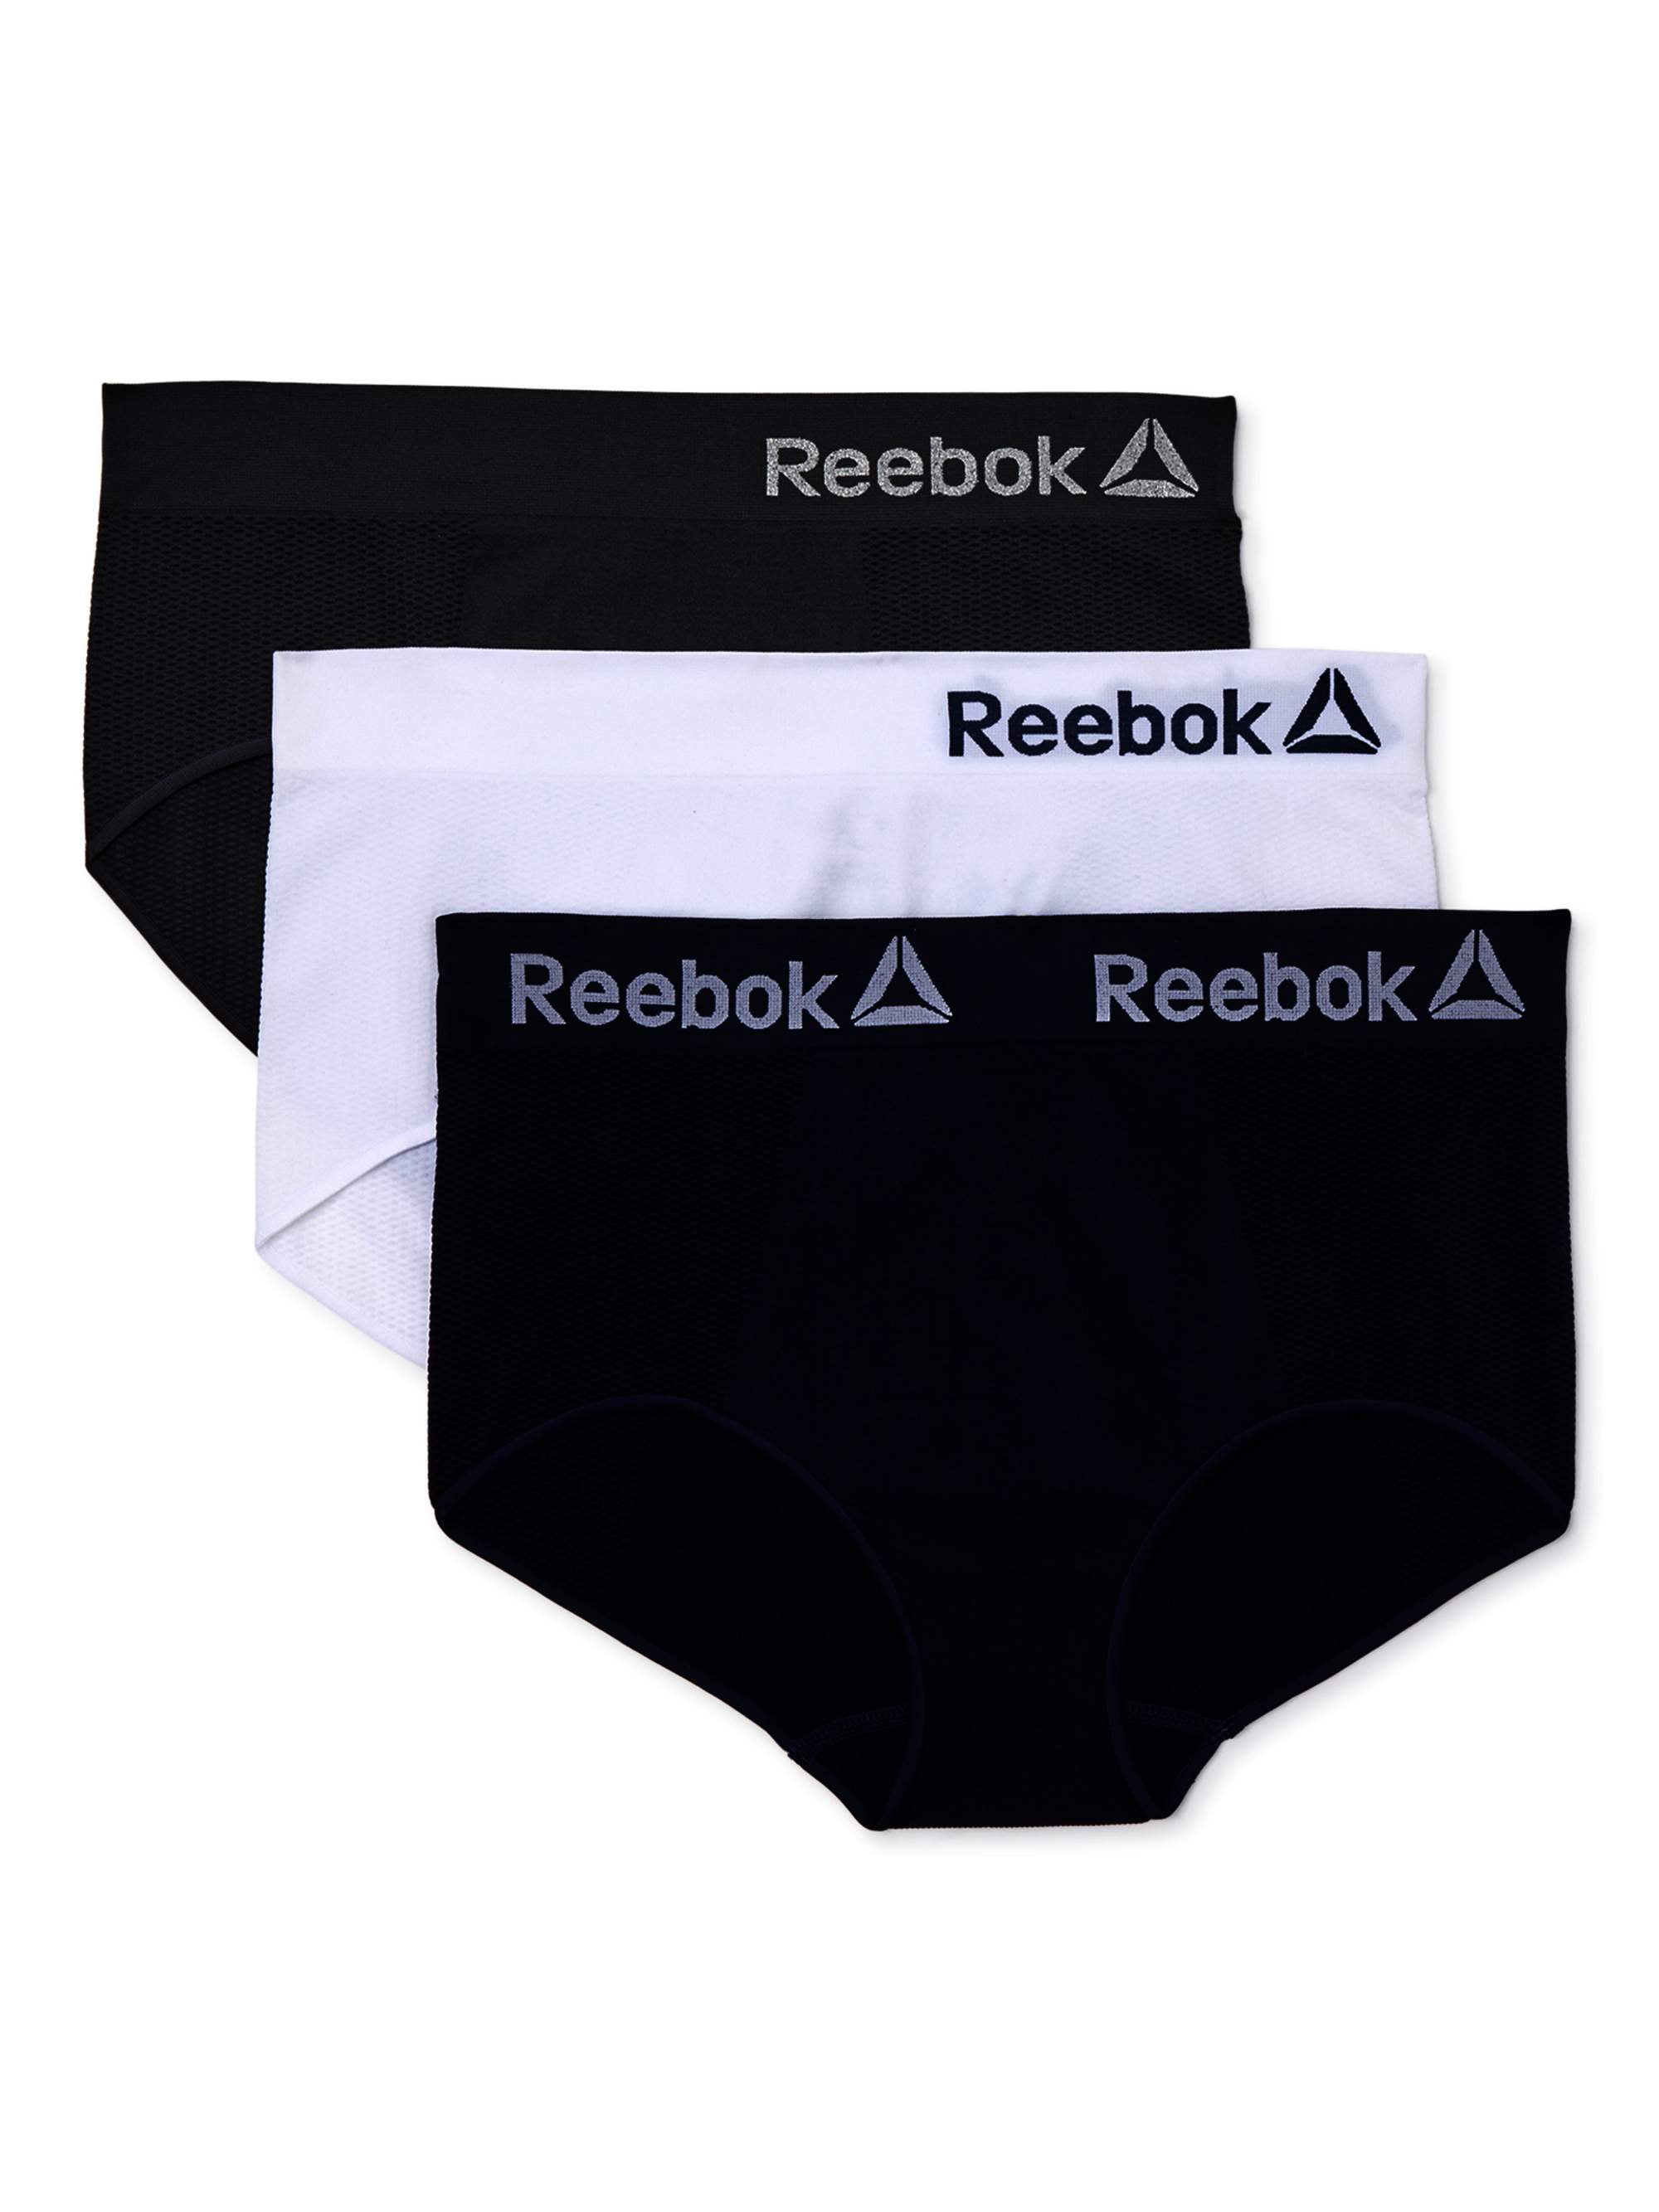 Reebok - Reebok Women's Seamless Brief Panties, 3-Pack - Walmart.com ...